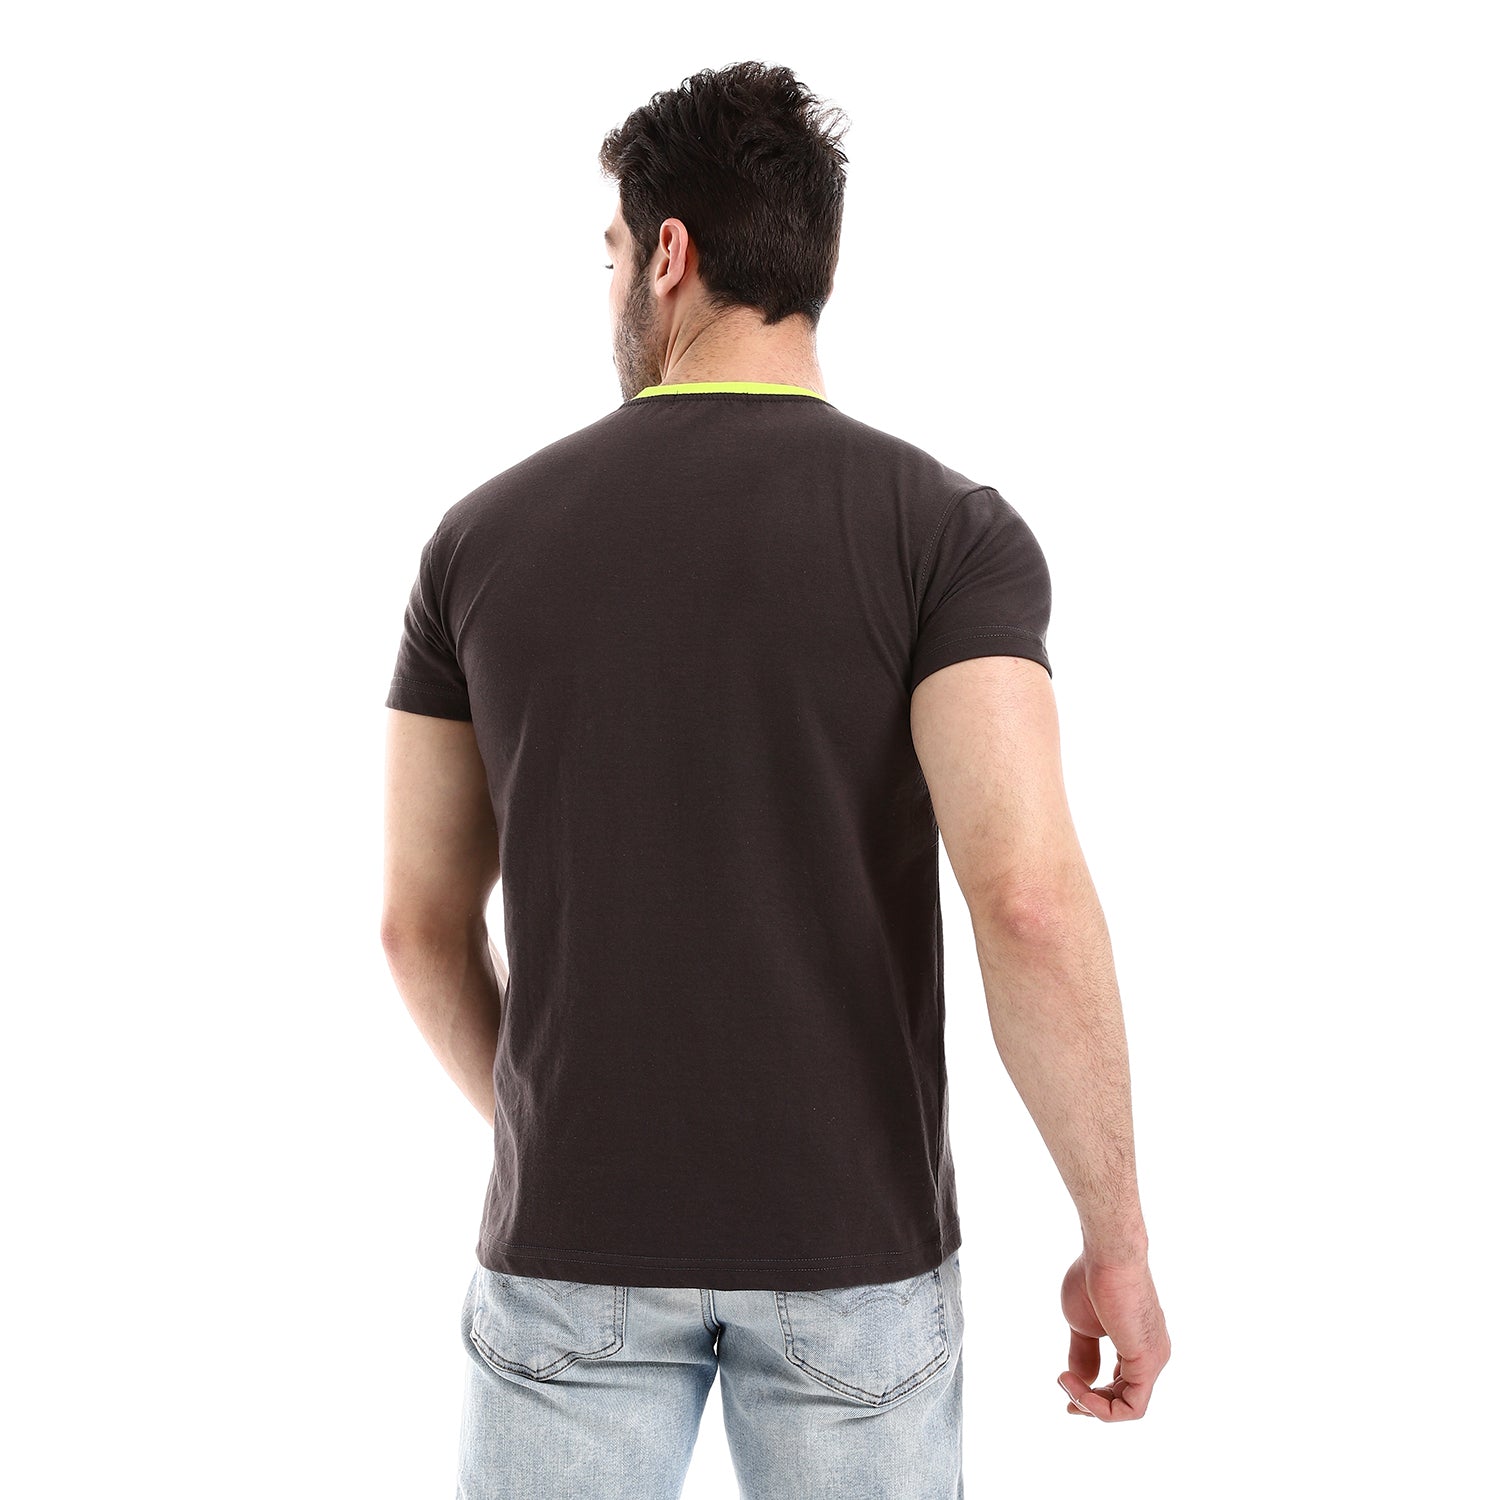 Pavone Printed Short Sleeves Round Neck T-Shirt (8323)